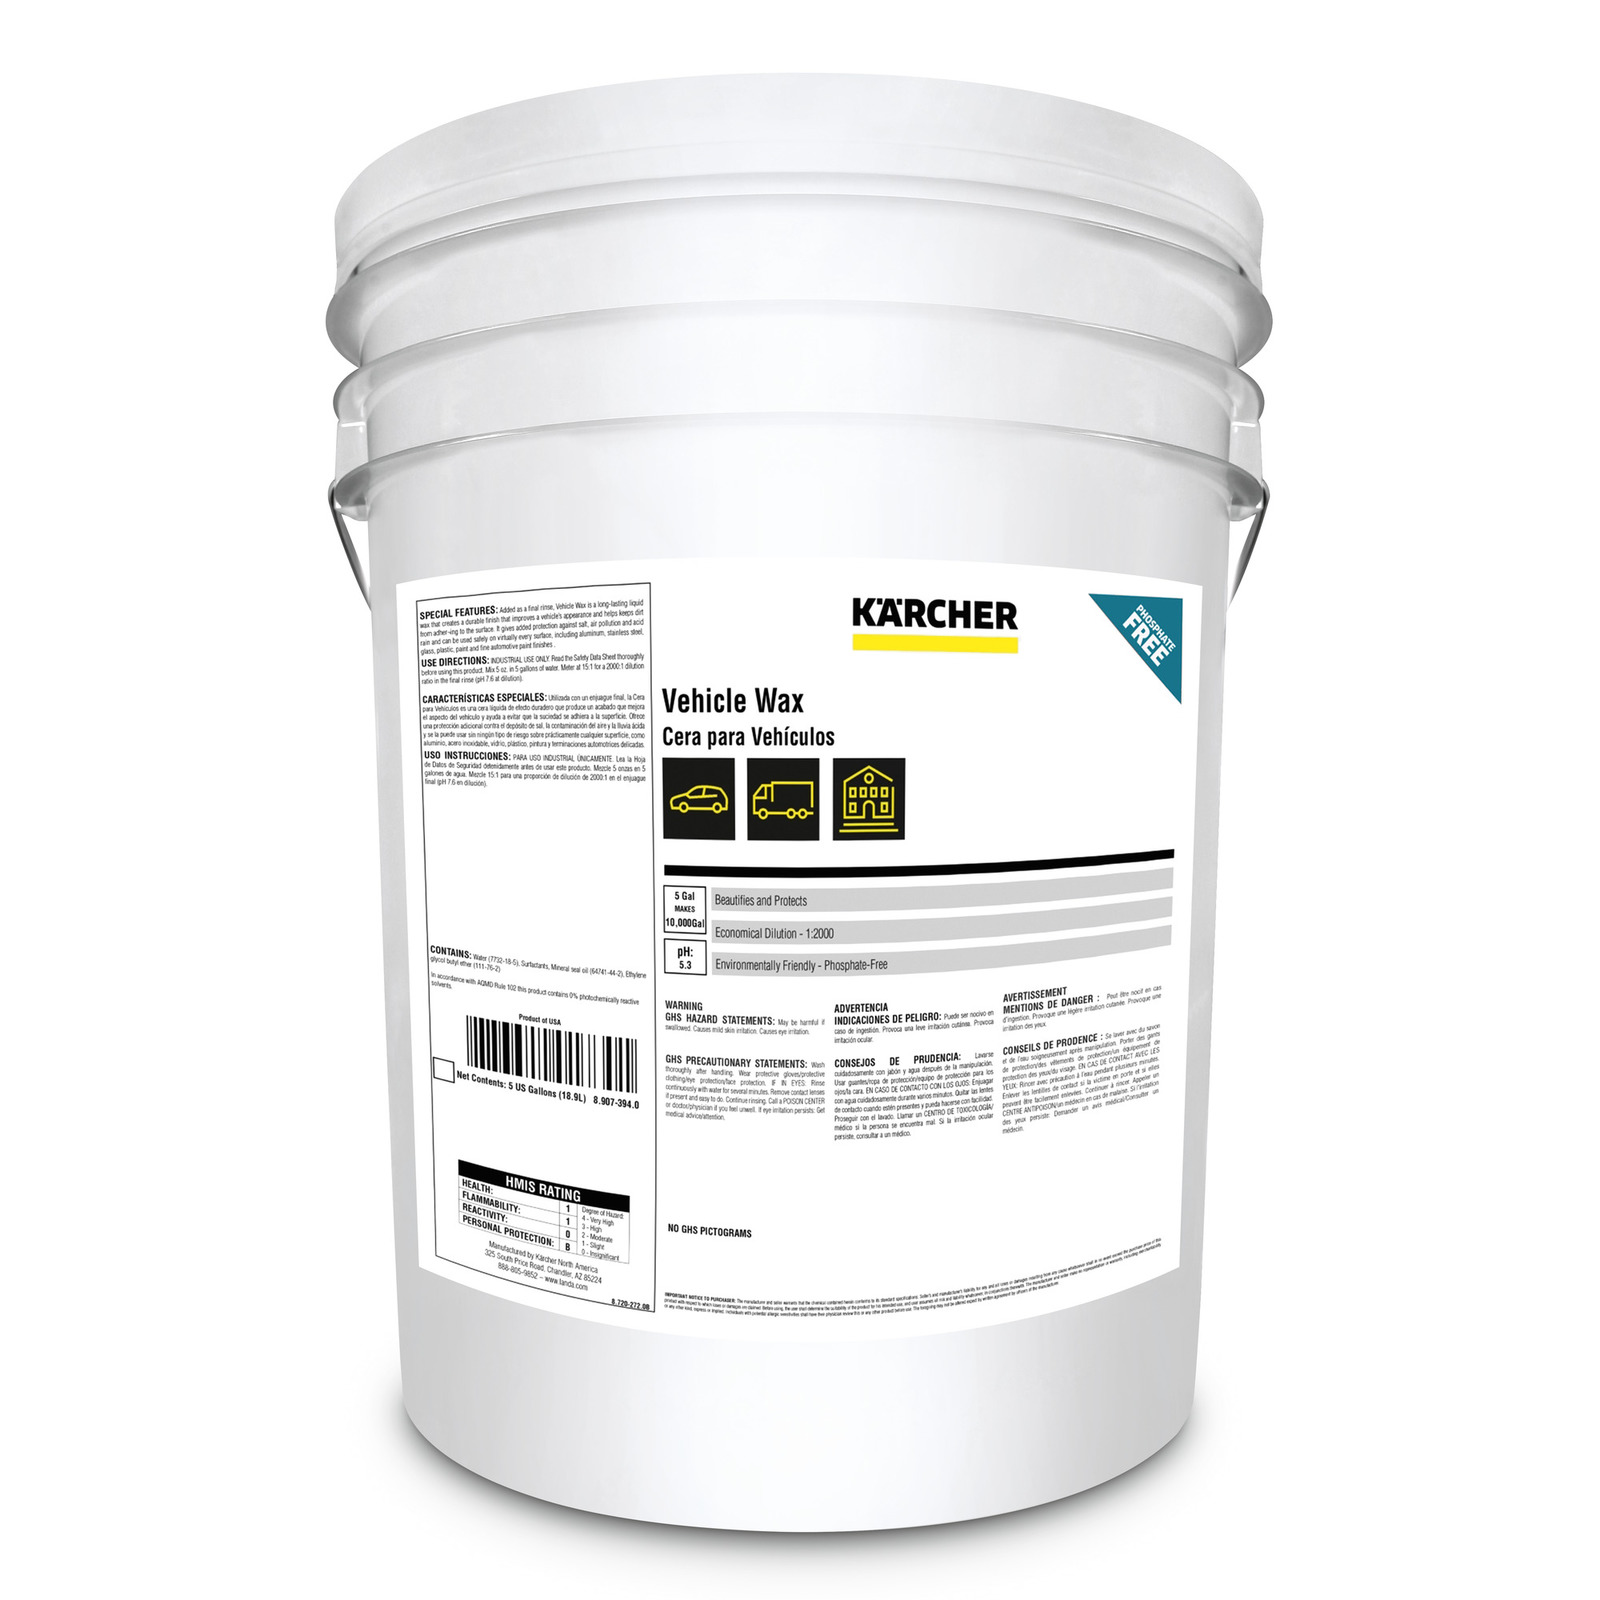 Karcher® Liberty HDS 3.5/20 Ea Cage Pressure Washer